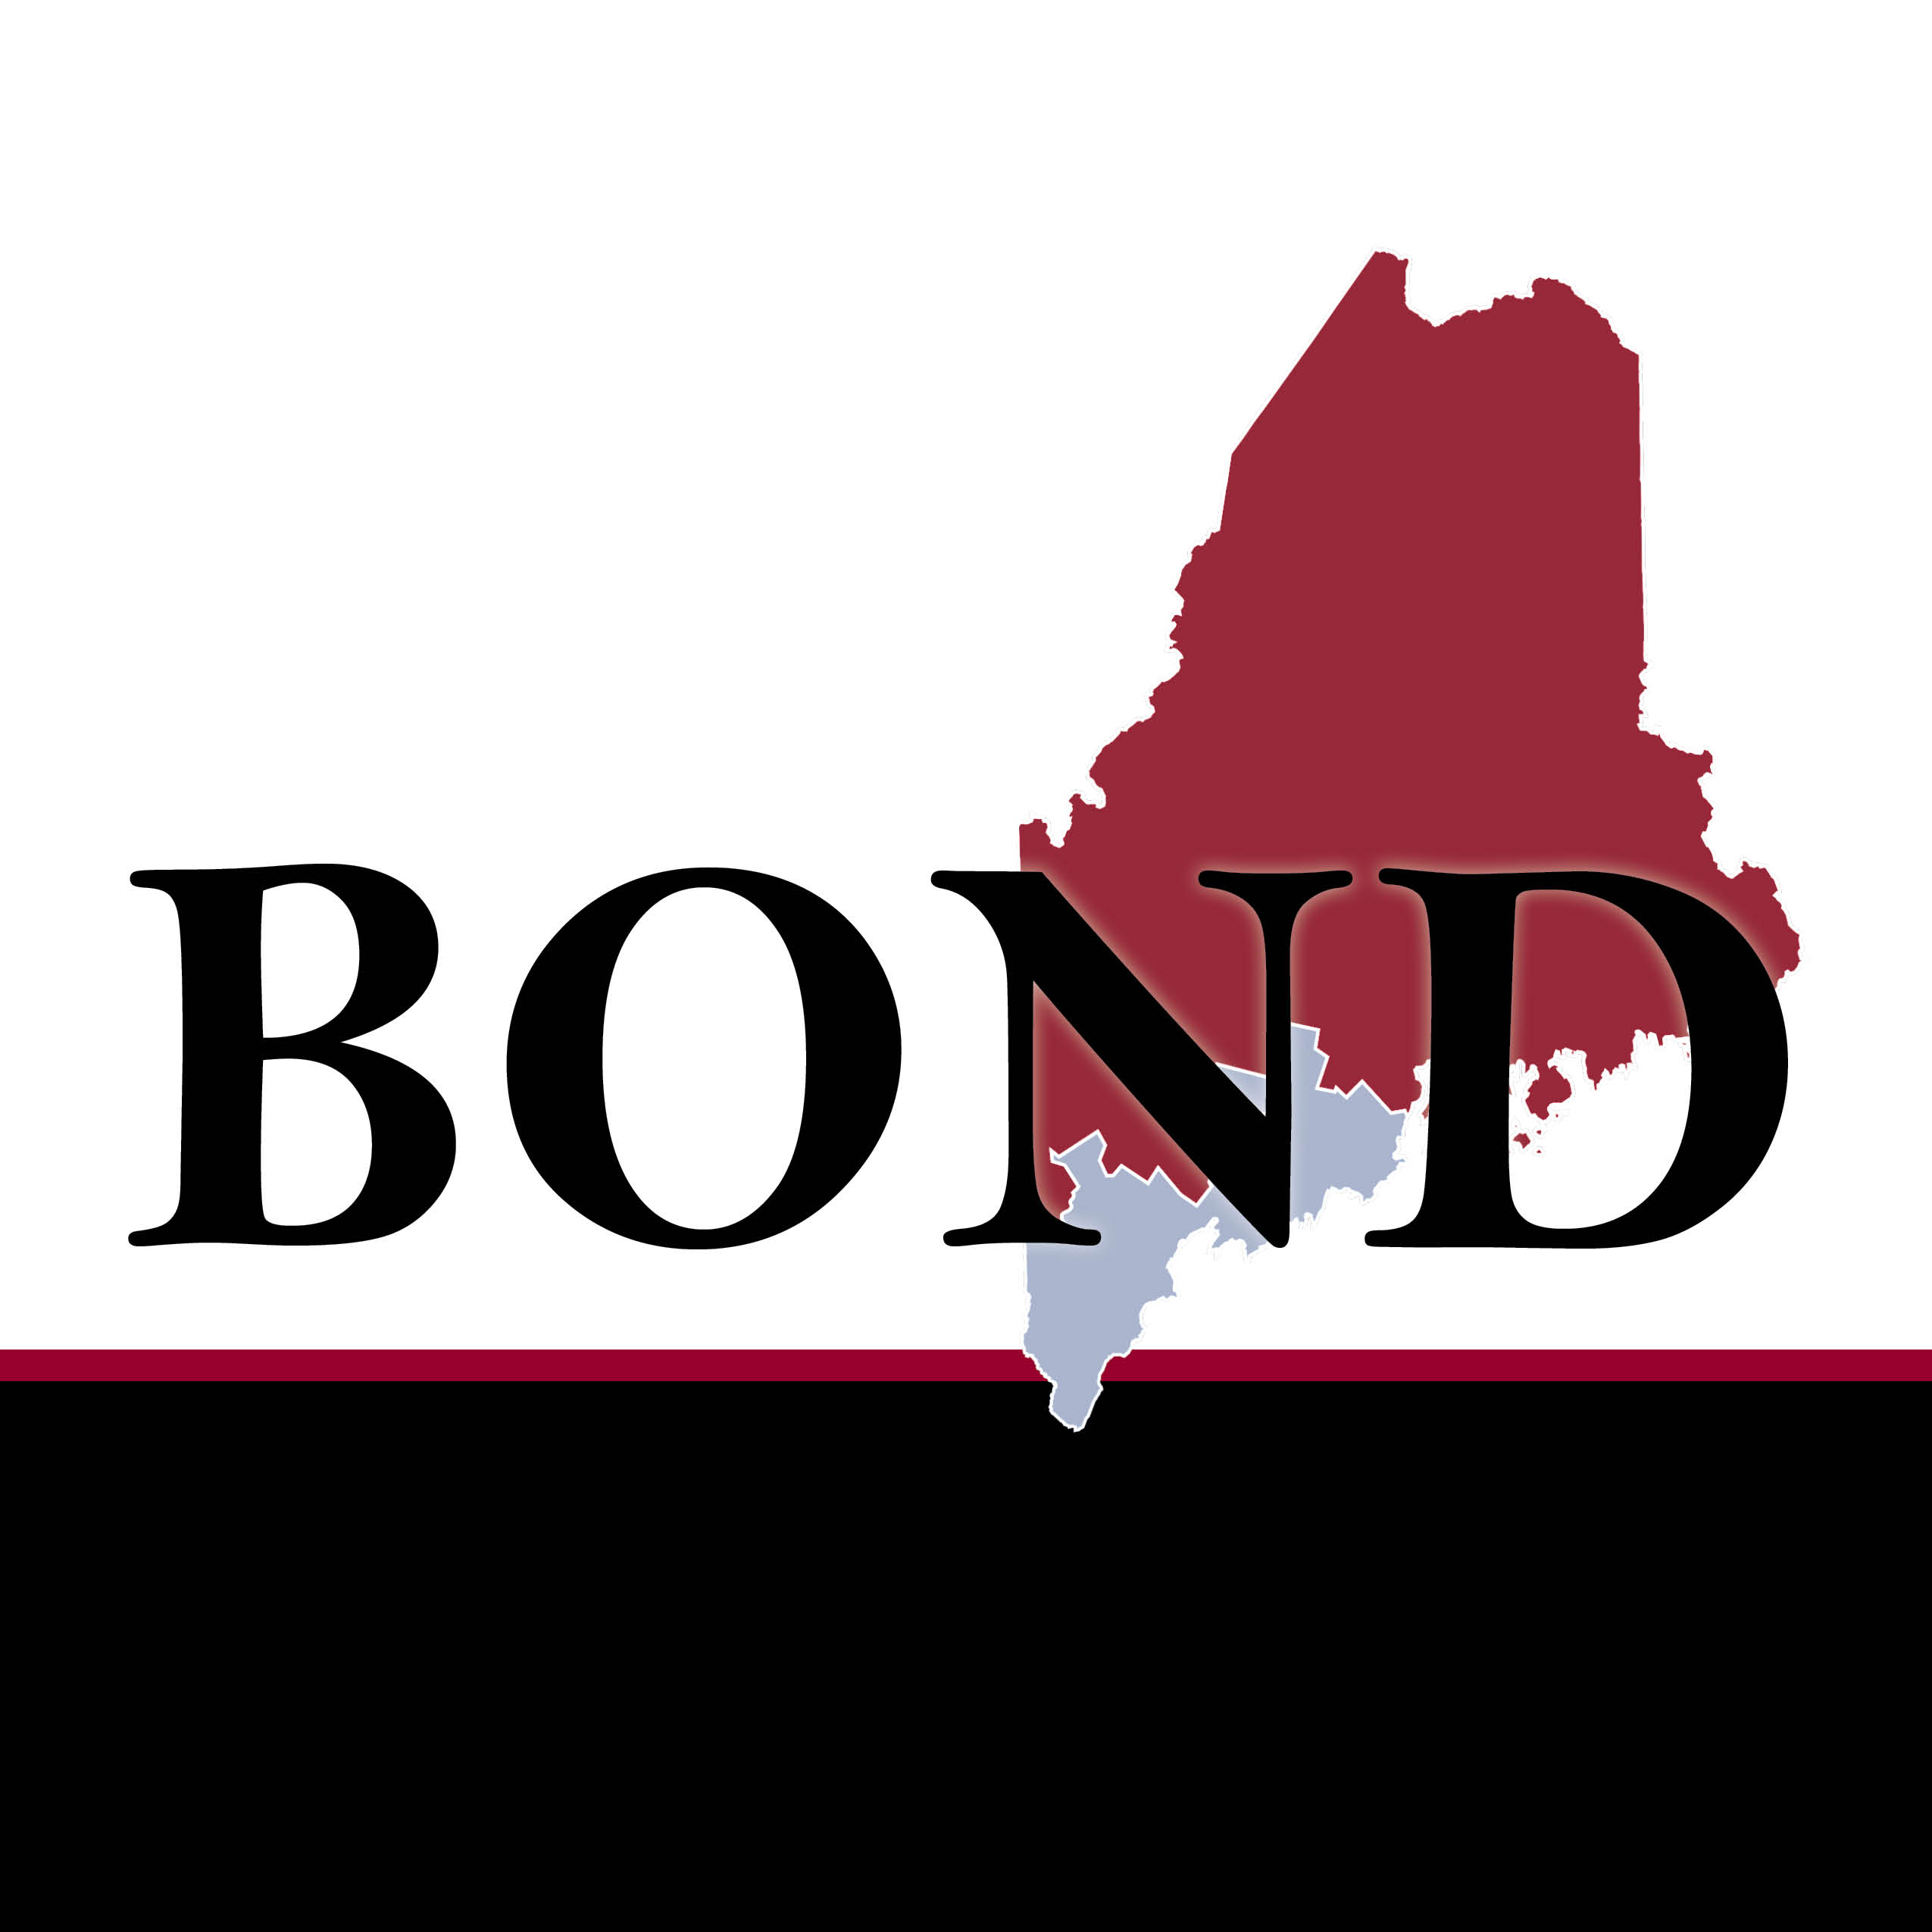 Tiffany Bond for Congress logo